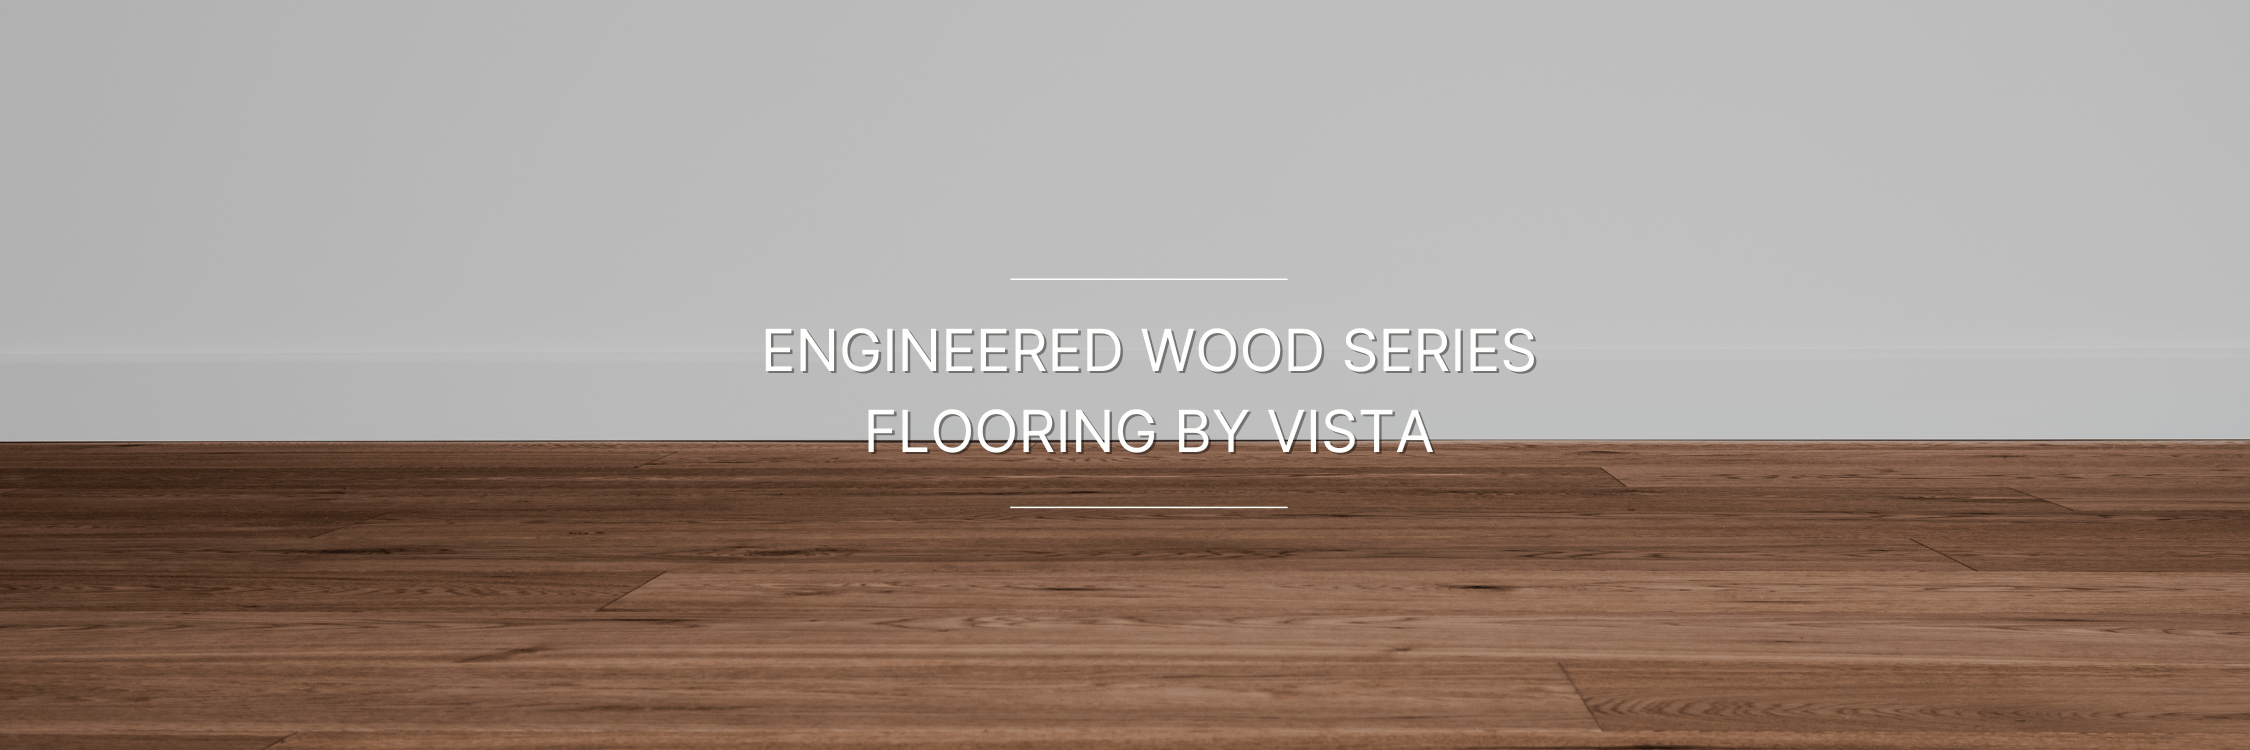 Engineered series wooden flooring by Vista